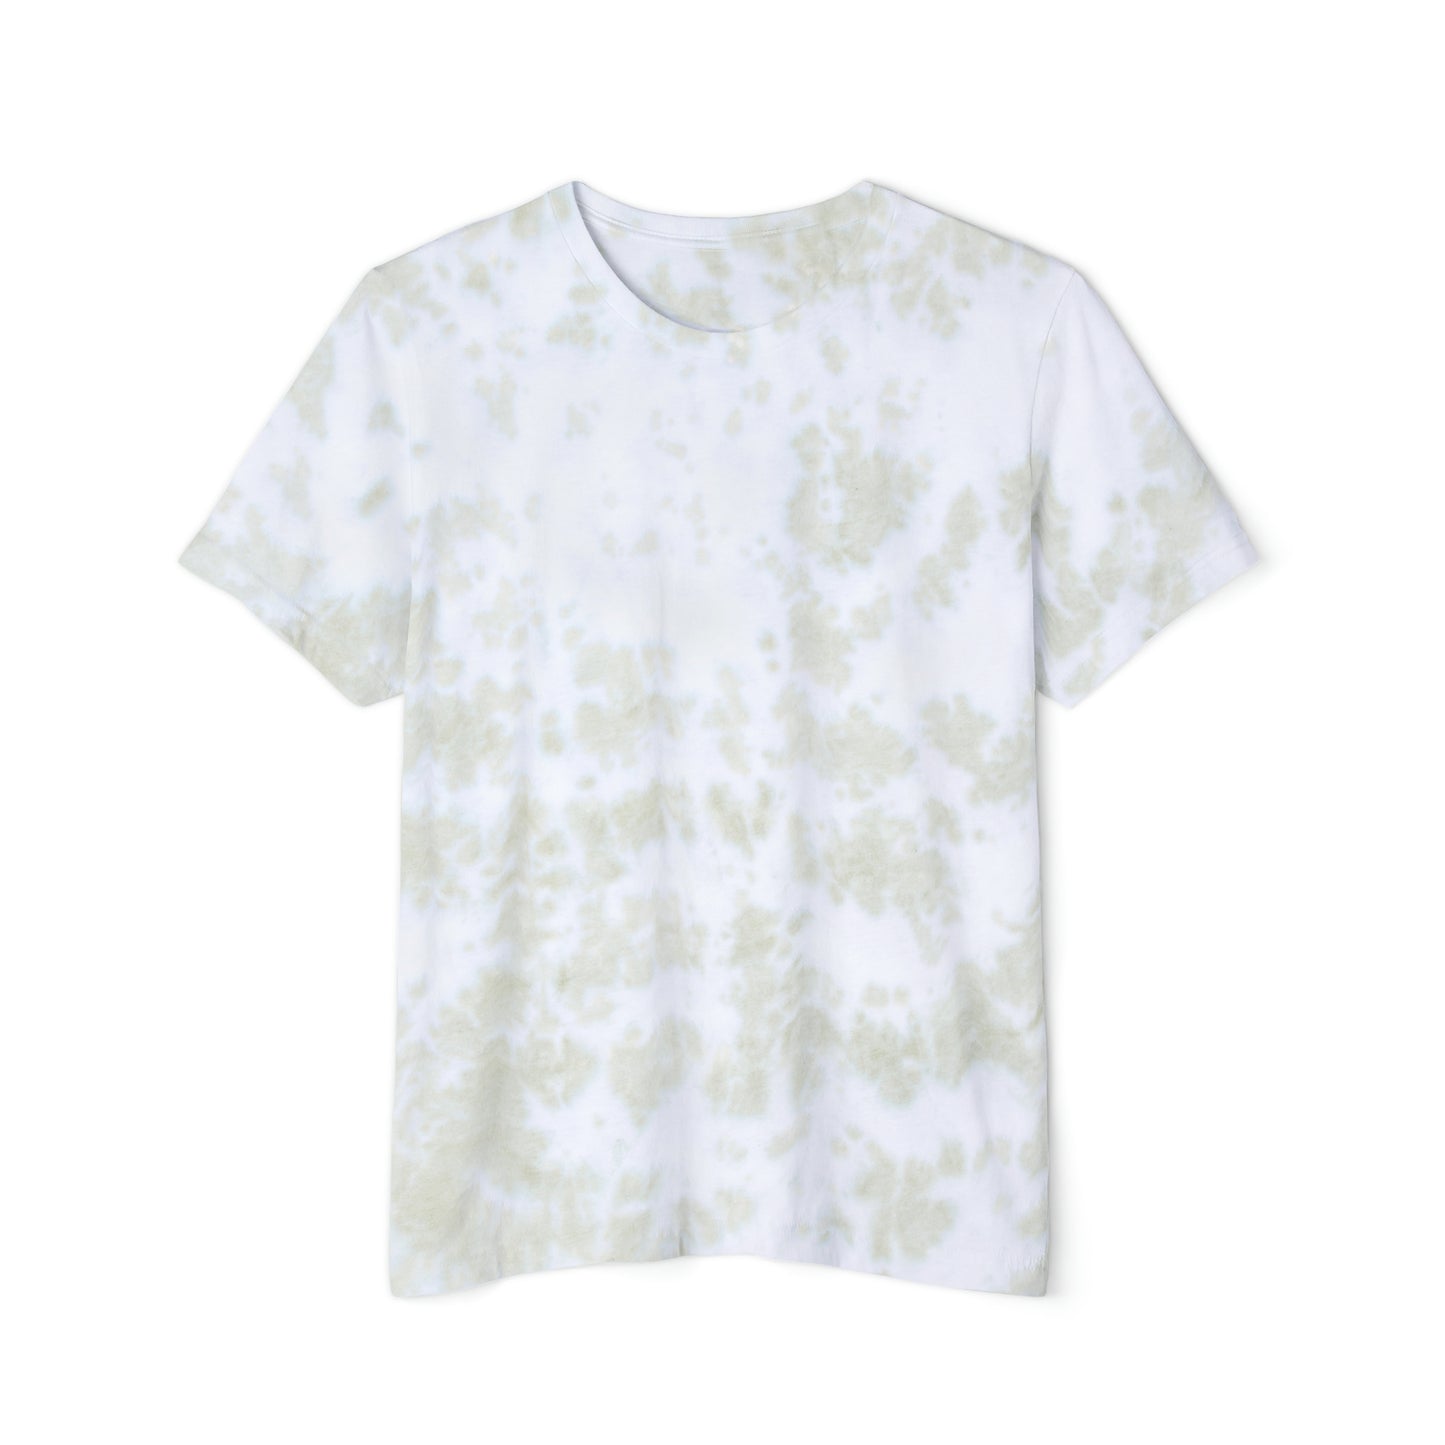 Unisex FWD Fashion Tie-Dyed T-Shirt